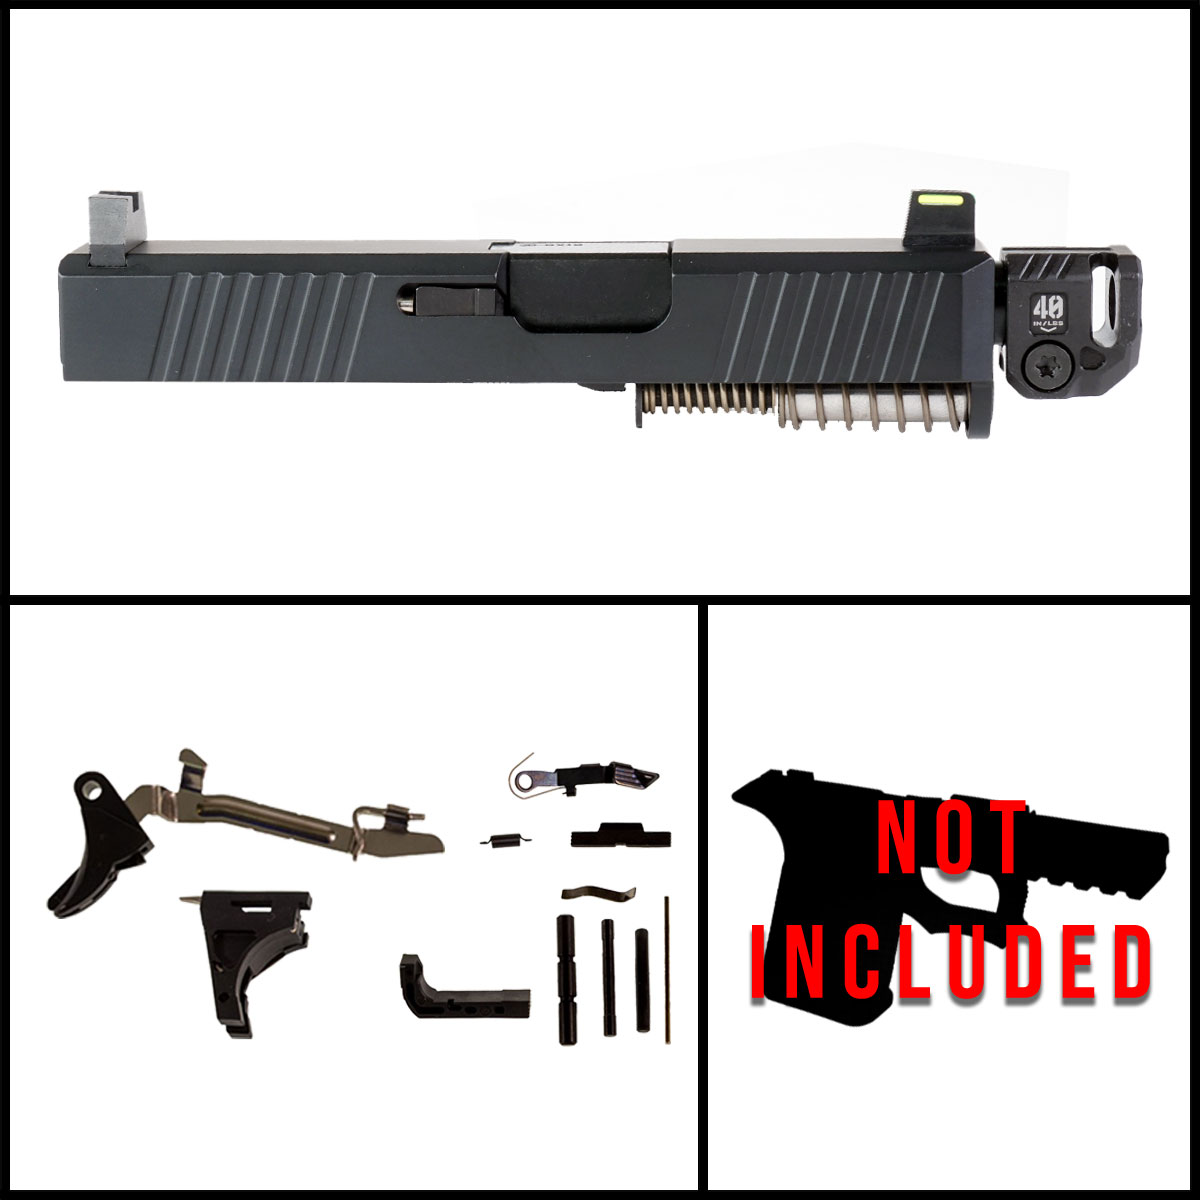 DTT 'Joint Resolution' 9mm Full Gun Kit - Glock 26 Gen 1-3 Compatible